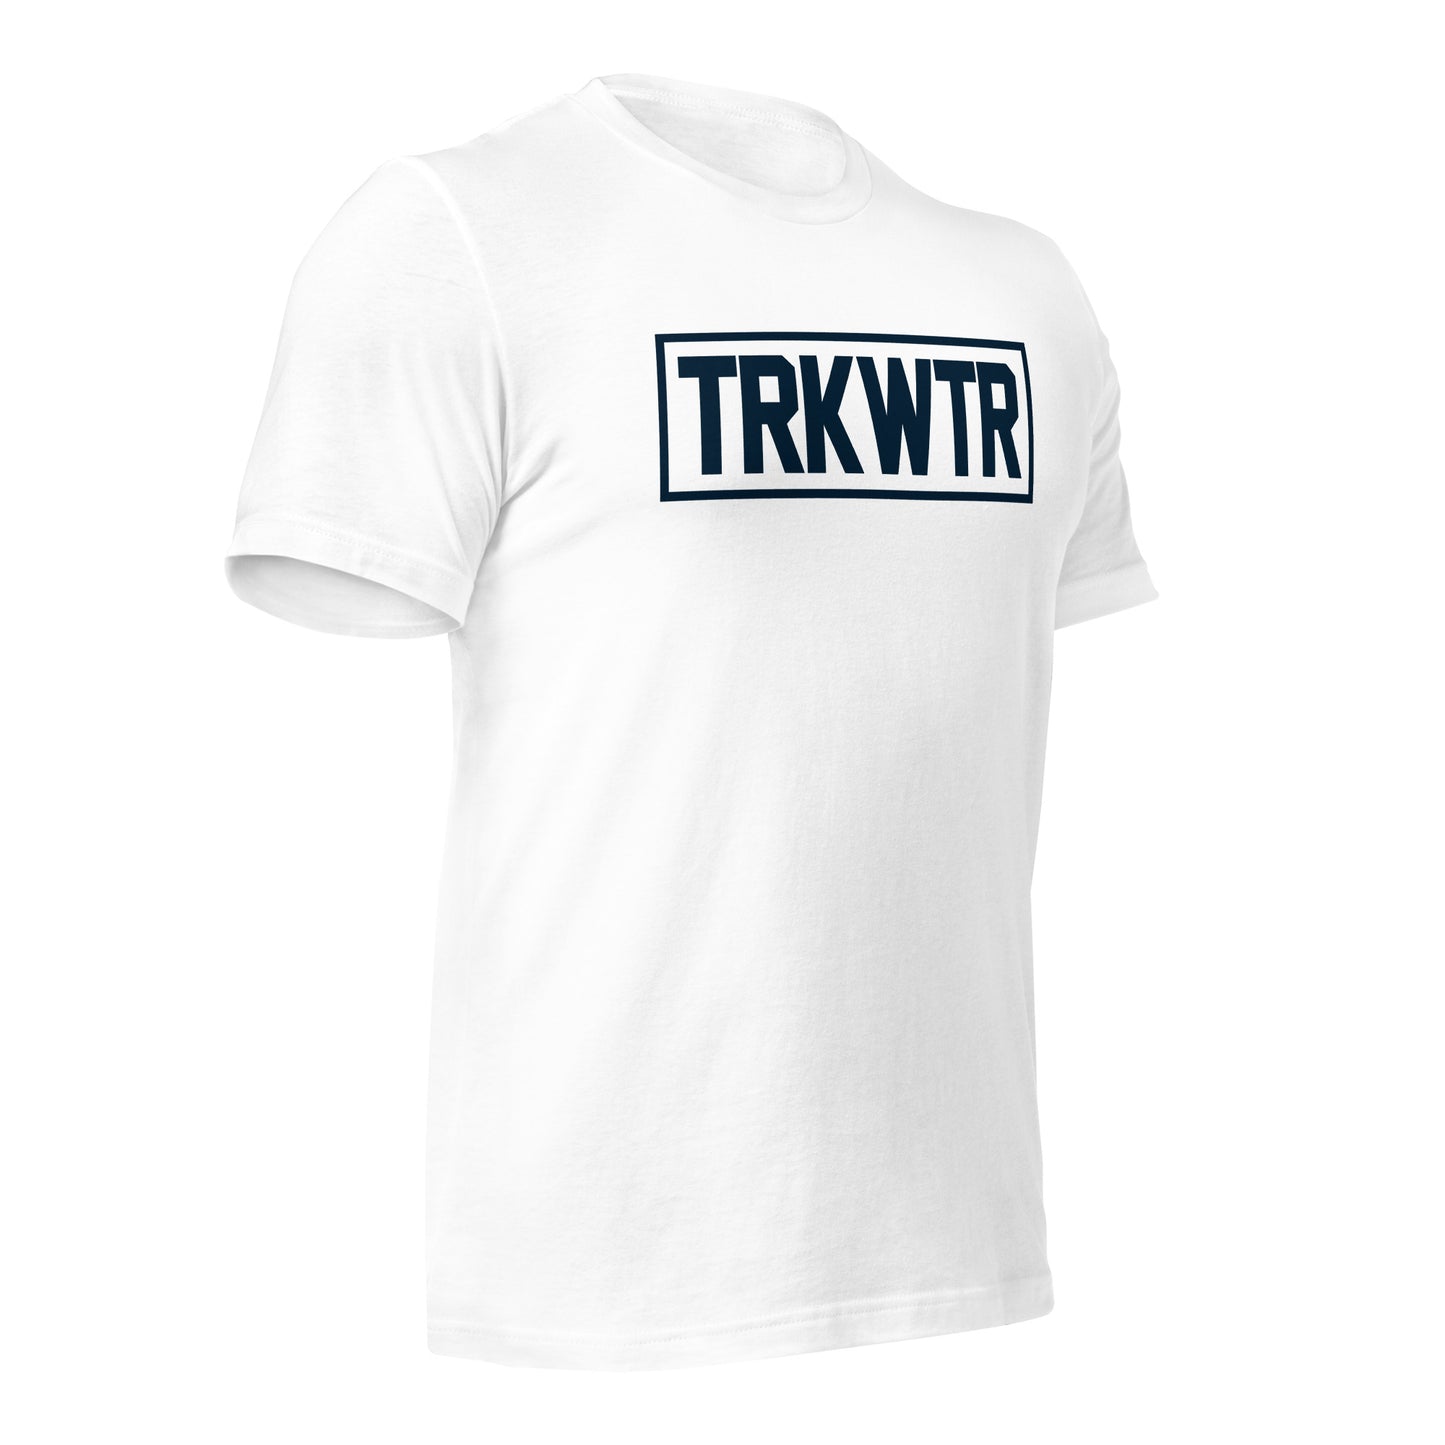 TRACKWATER Unisex-T-Shirt